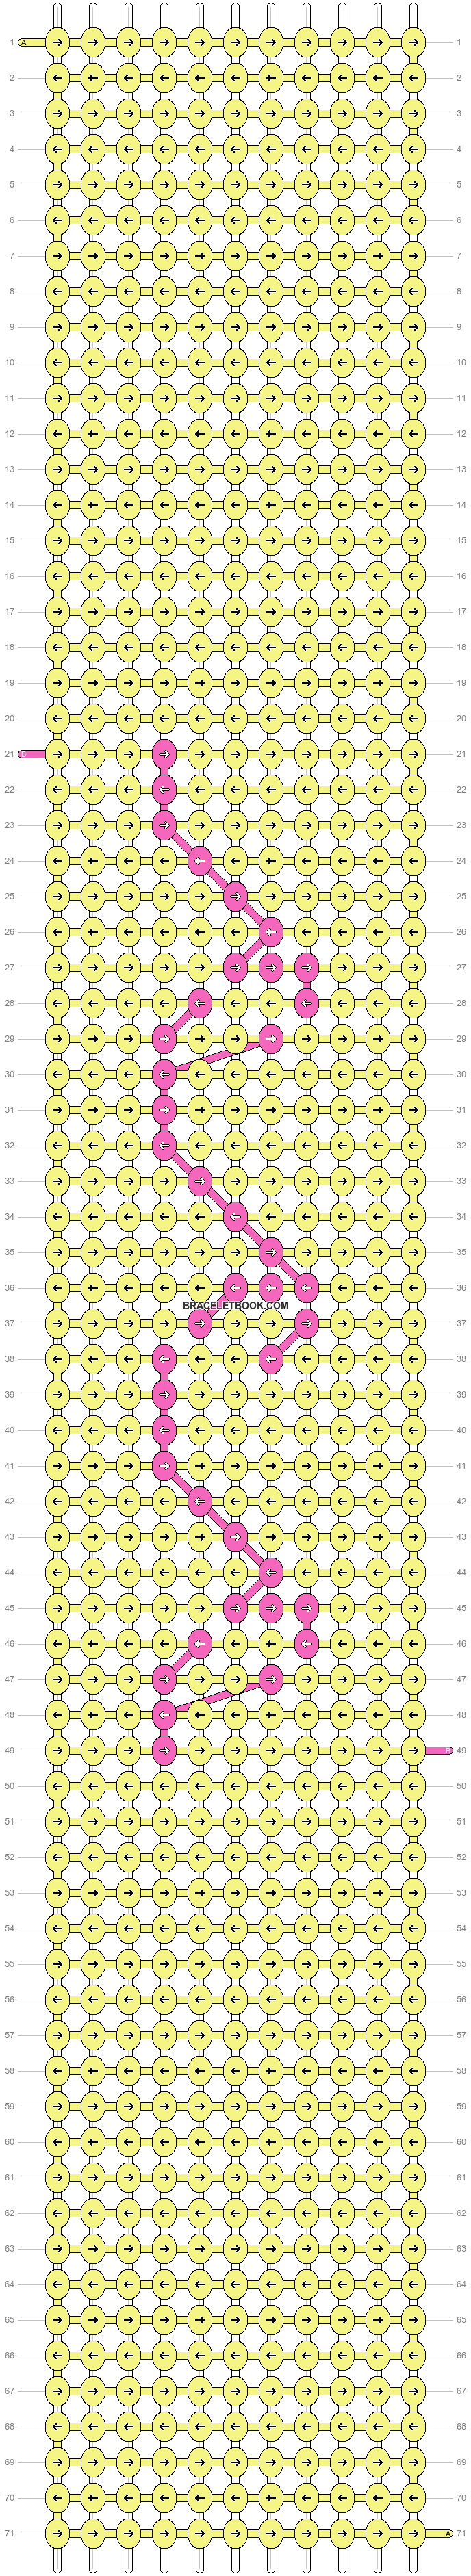 Alpha pattern #38672 variation #101544 pattern